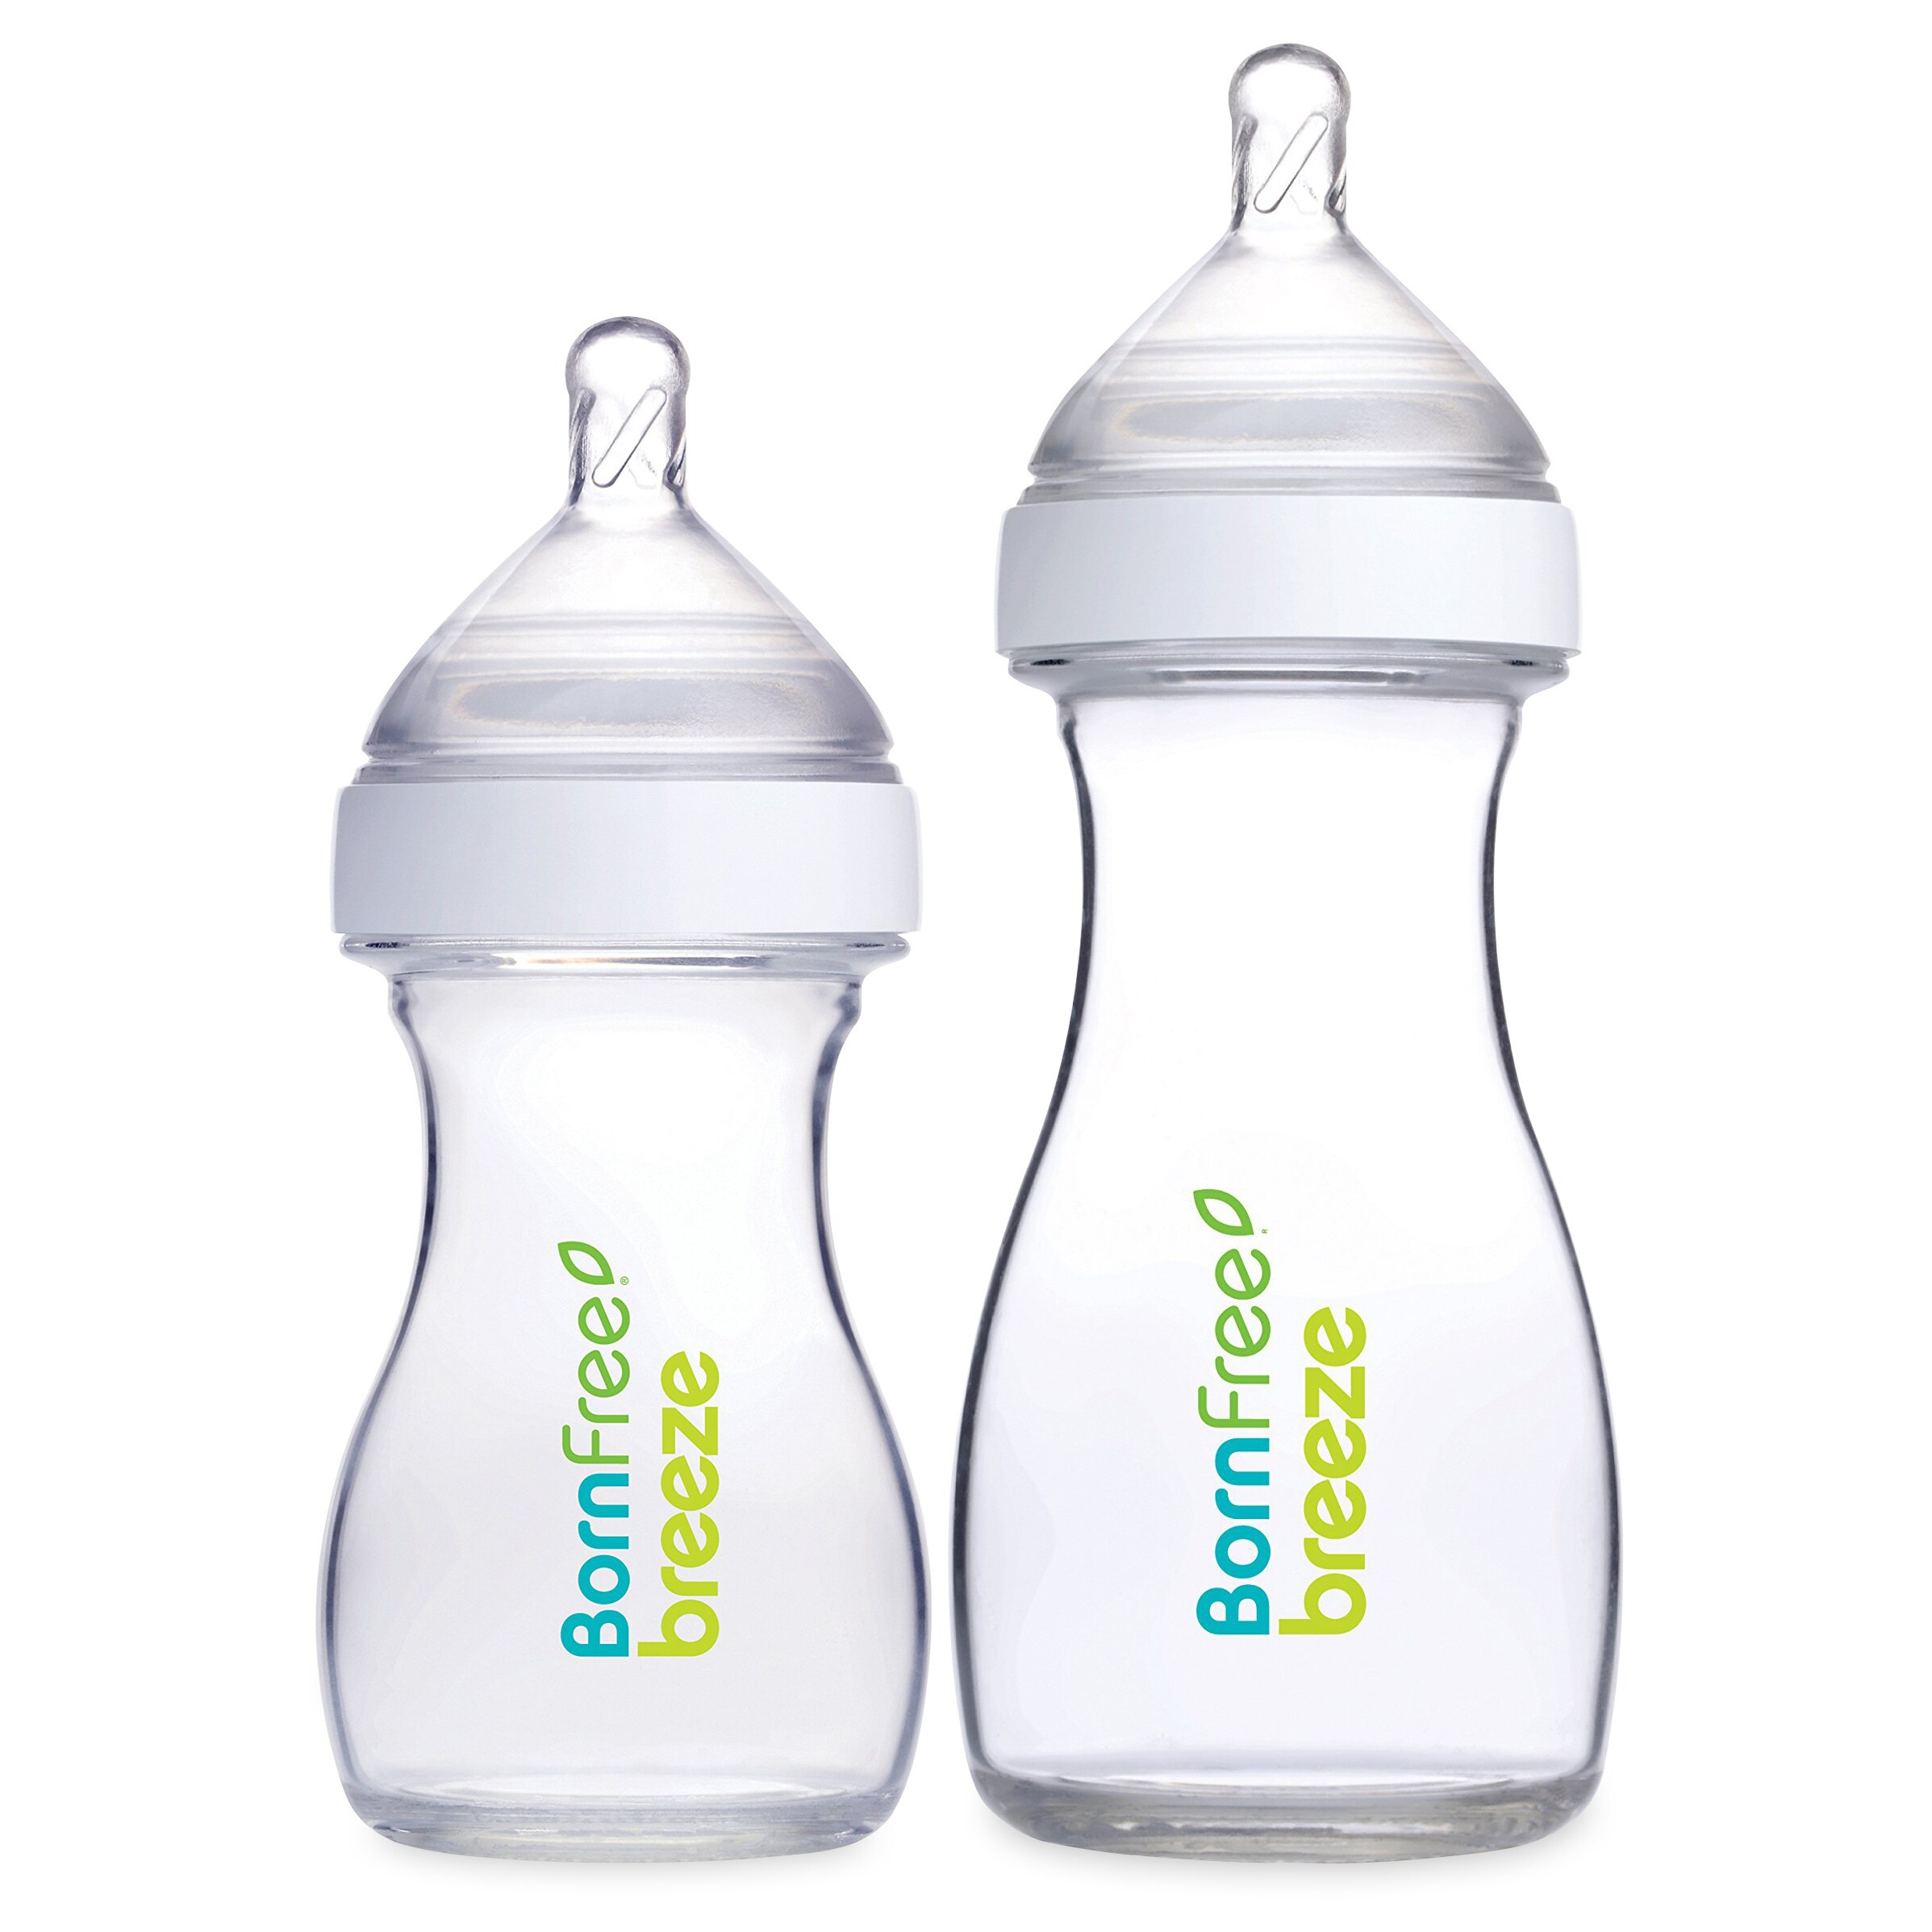 born free plastic bottles